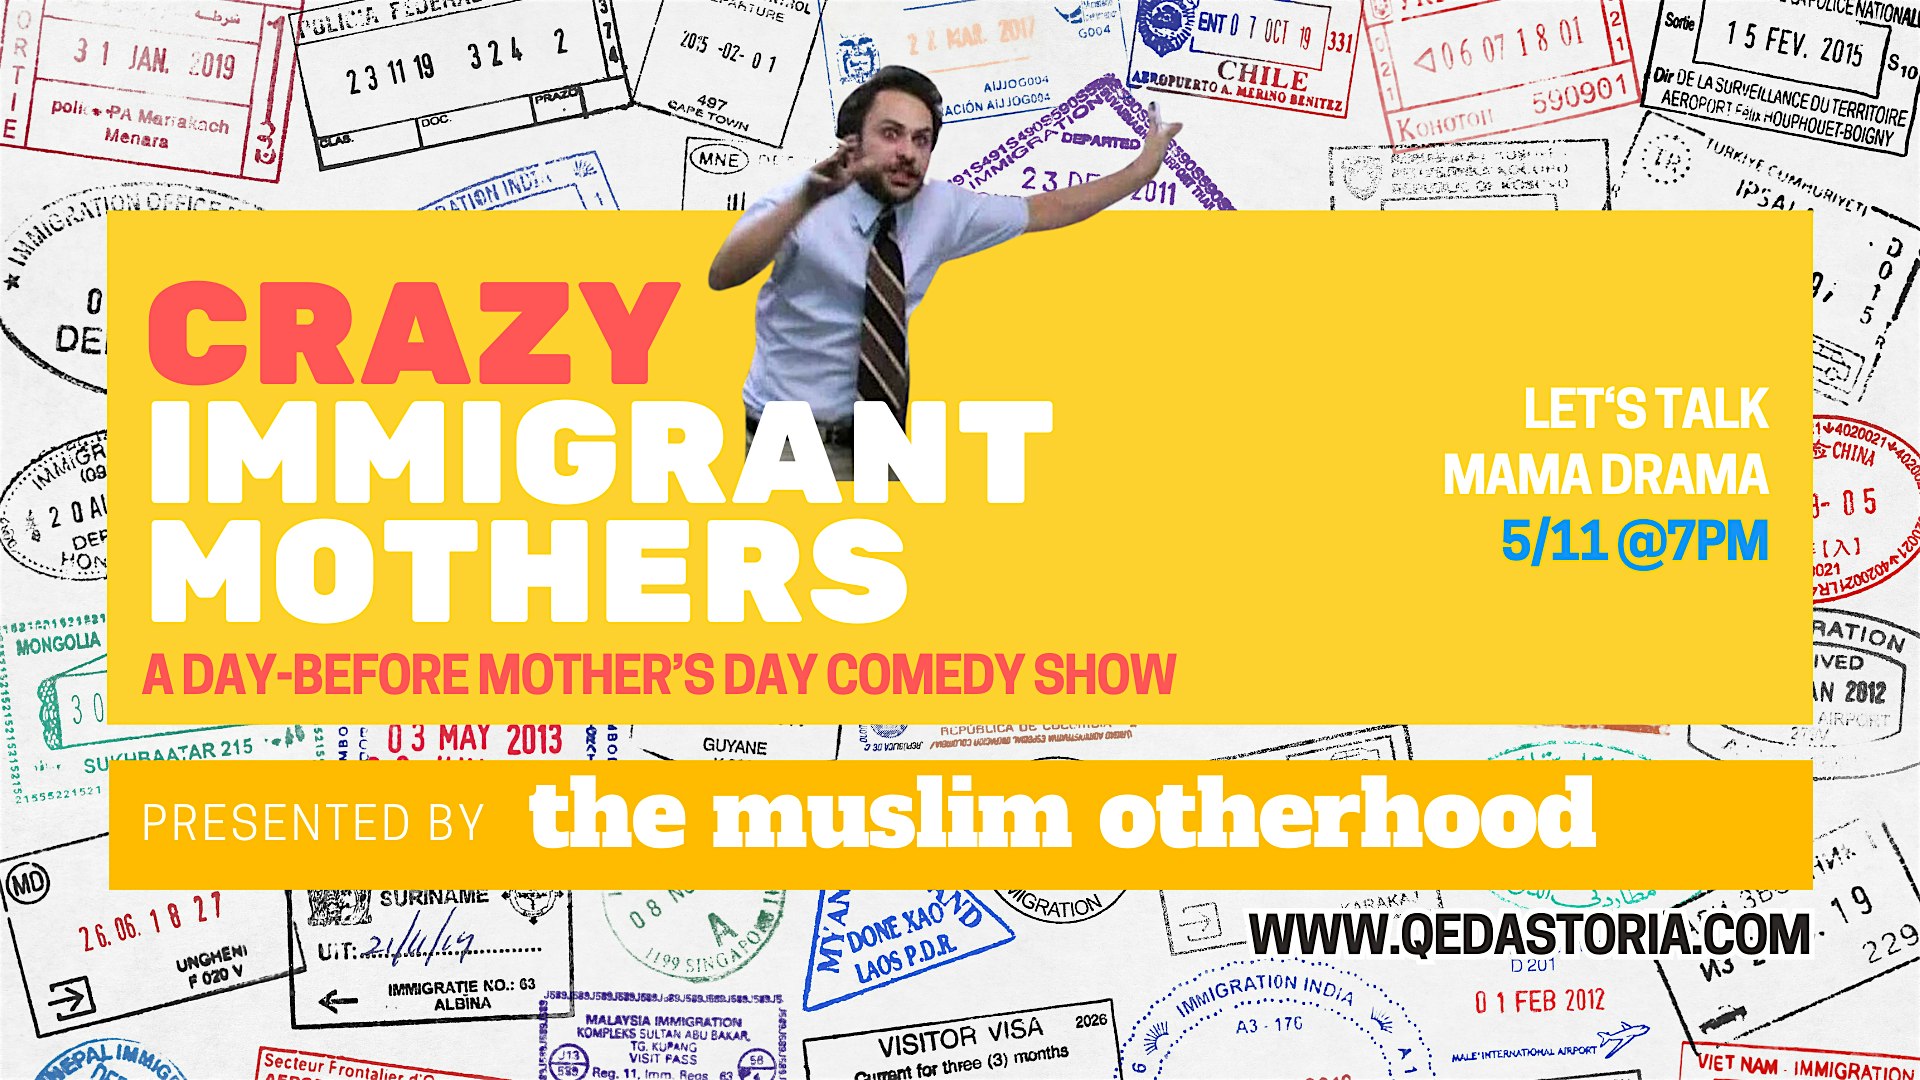 Muslim Otherhood Presents: Crazy Immigrant Mothers